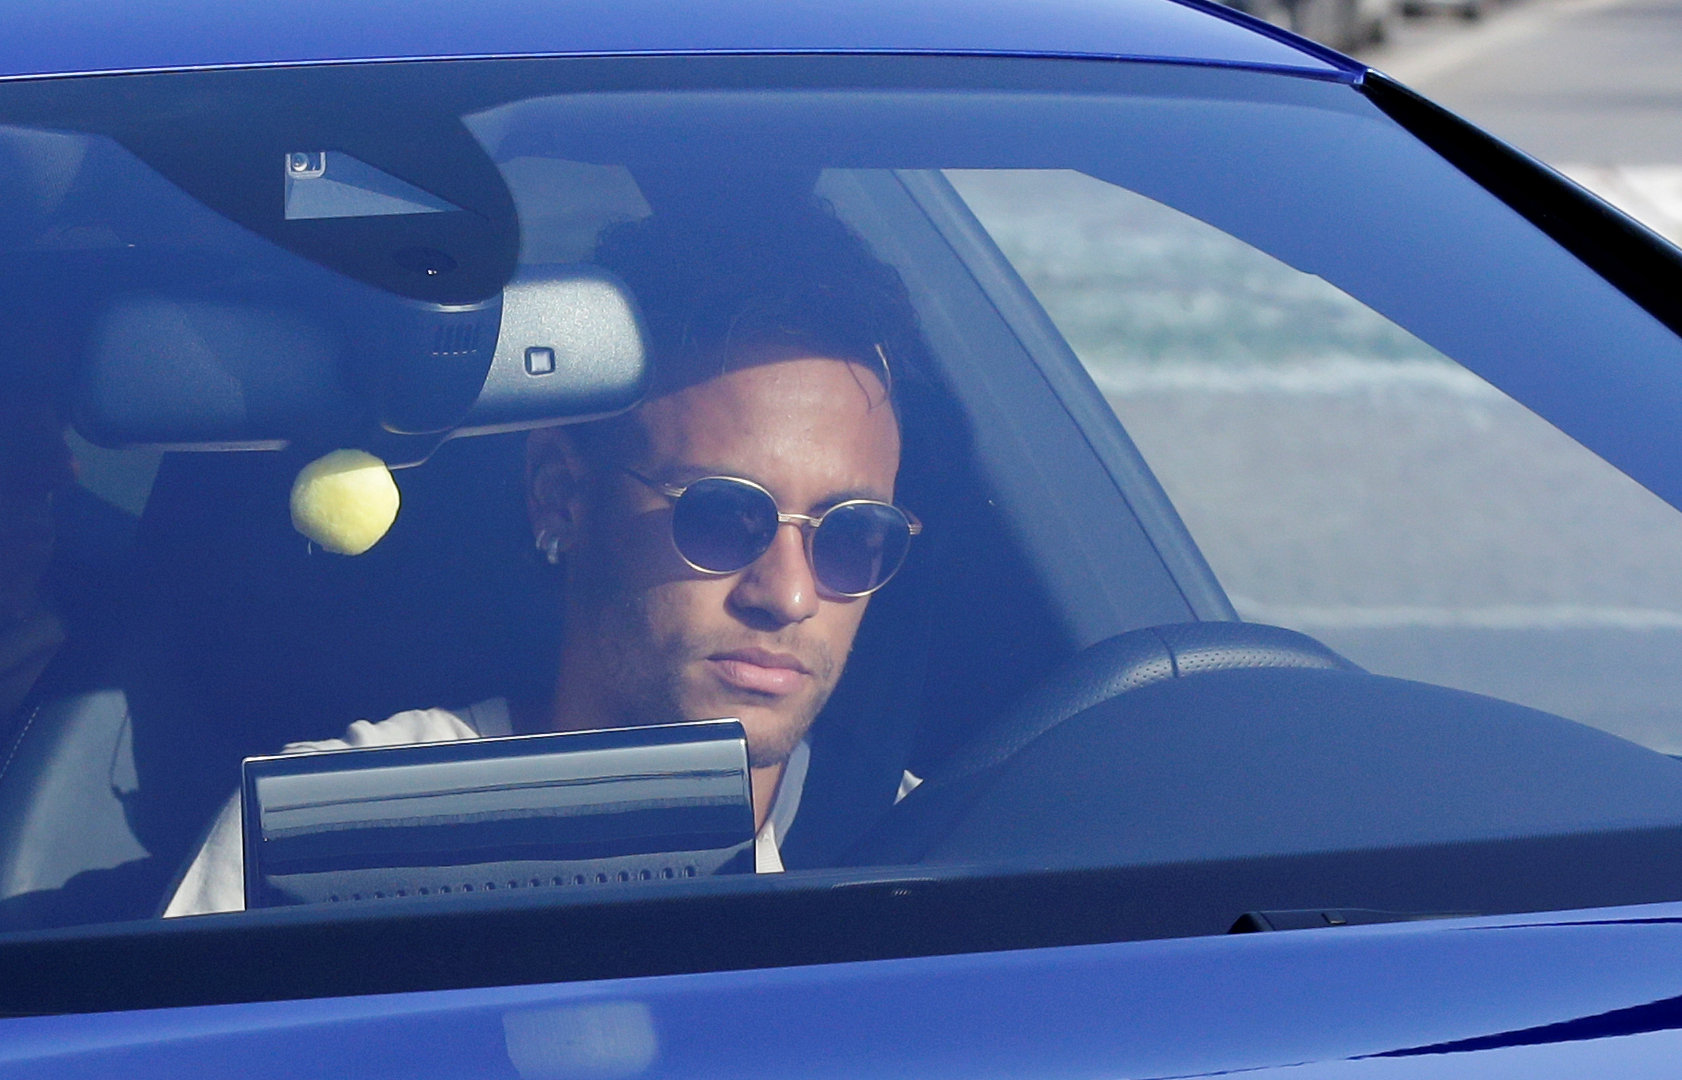 Football: Neymar tells Barcelona he is leaving, says club